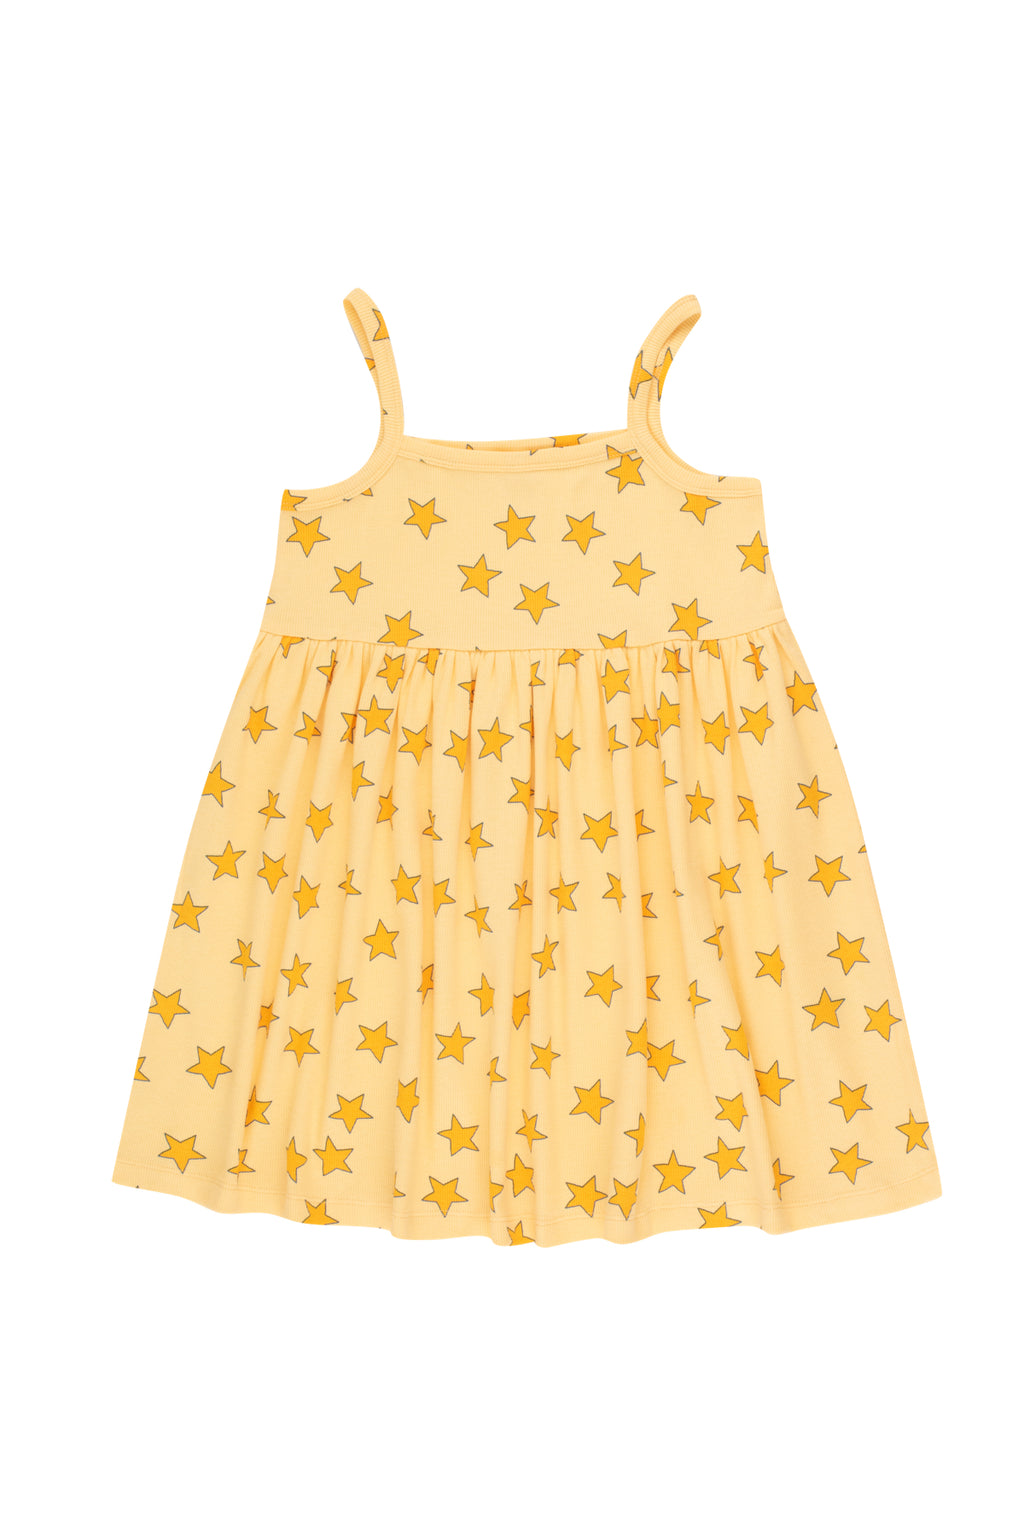 Tiny Cottons Stars Dress - Mellow Yellow